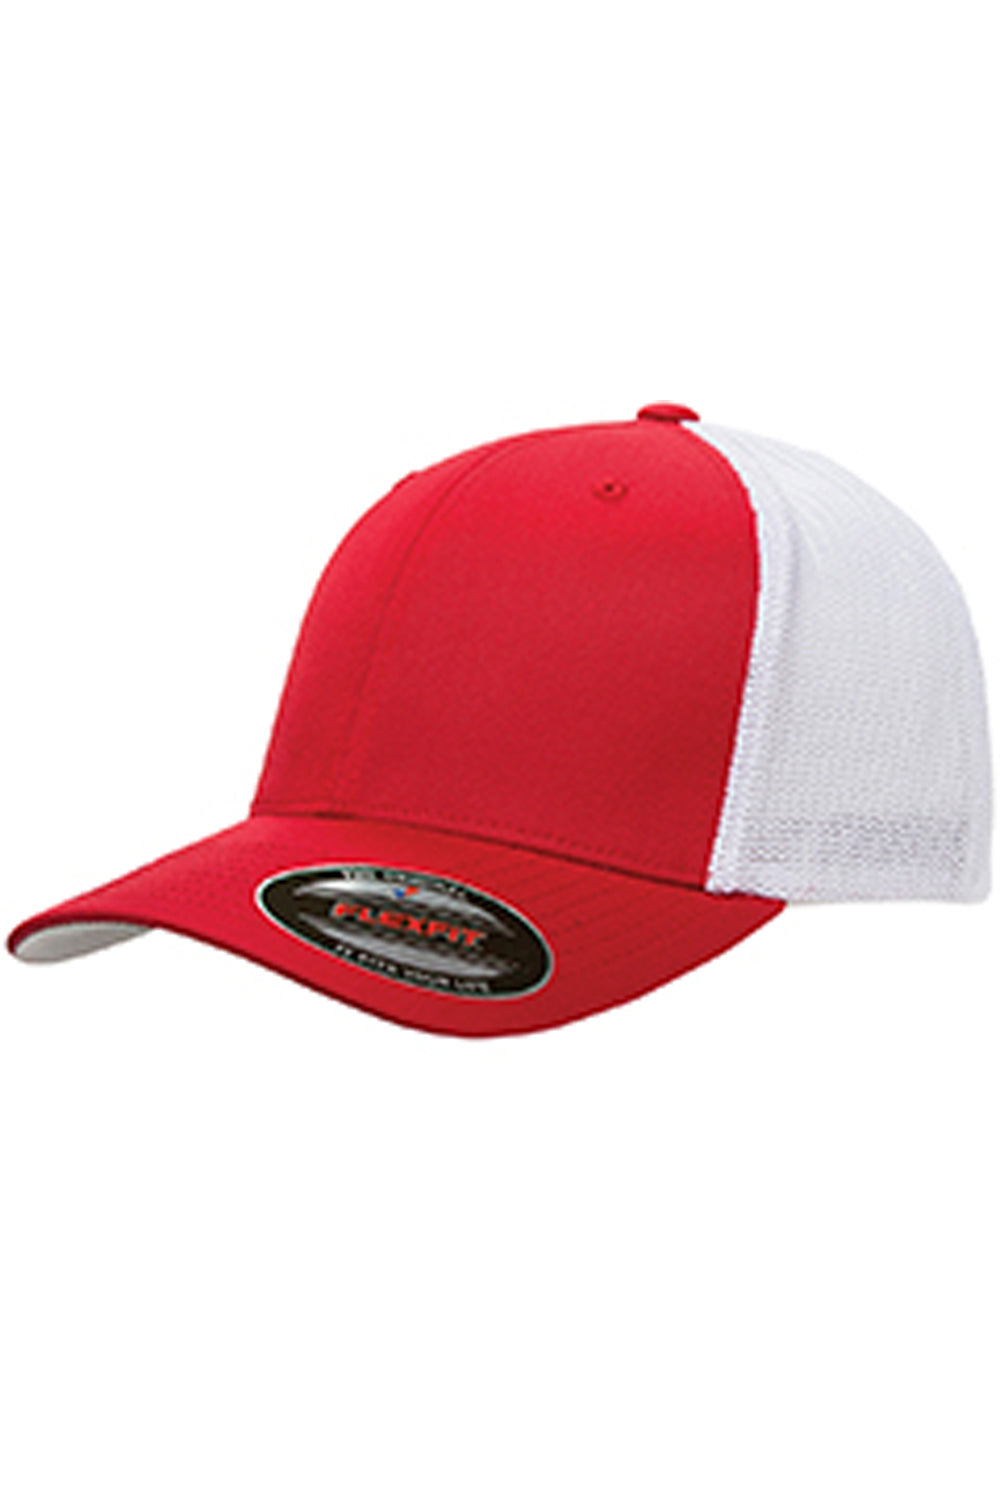 Flexfit 6511 Mens Stretch Fit Trucker Hat Red/White Front